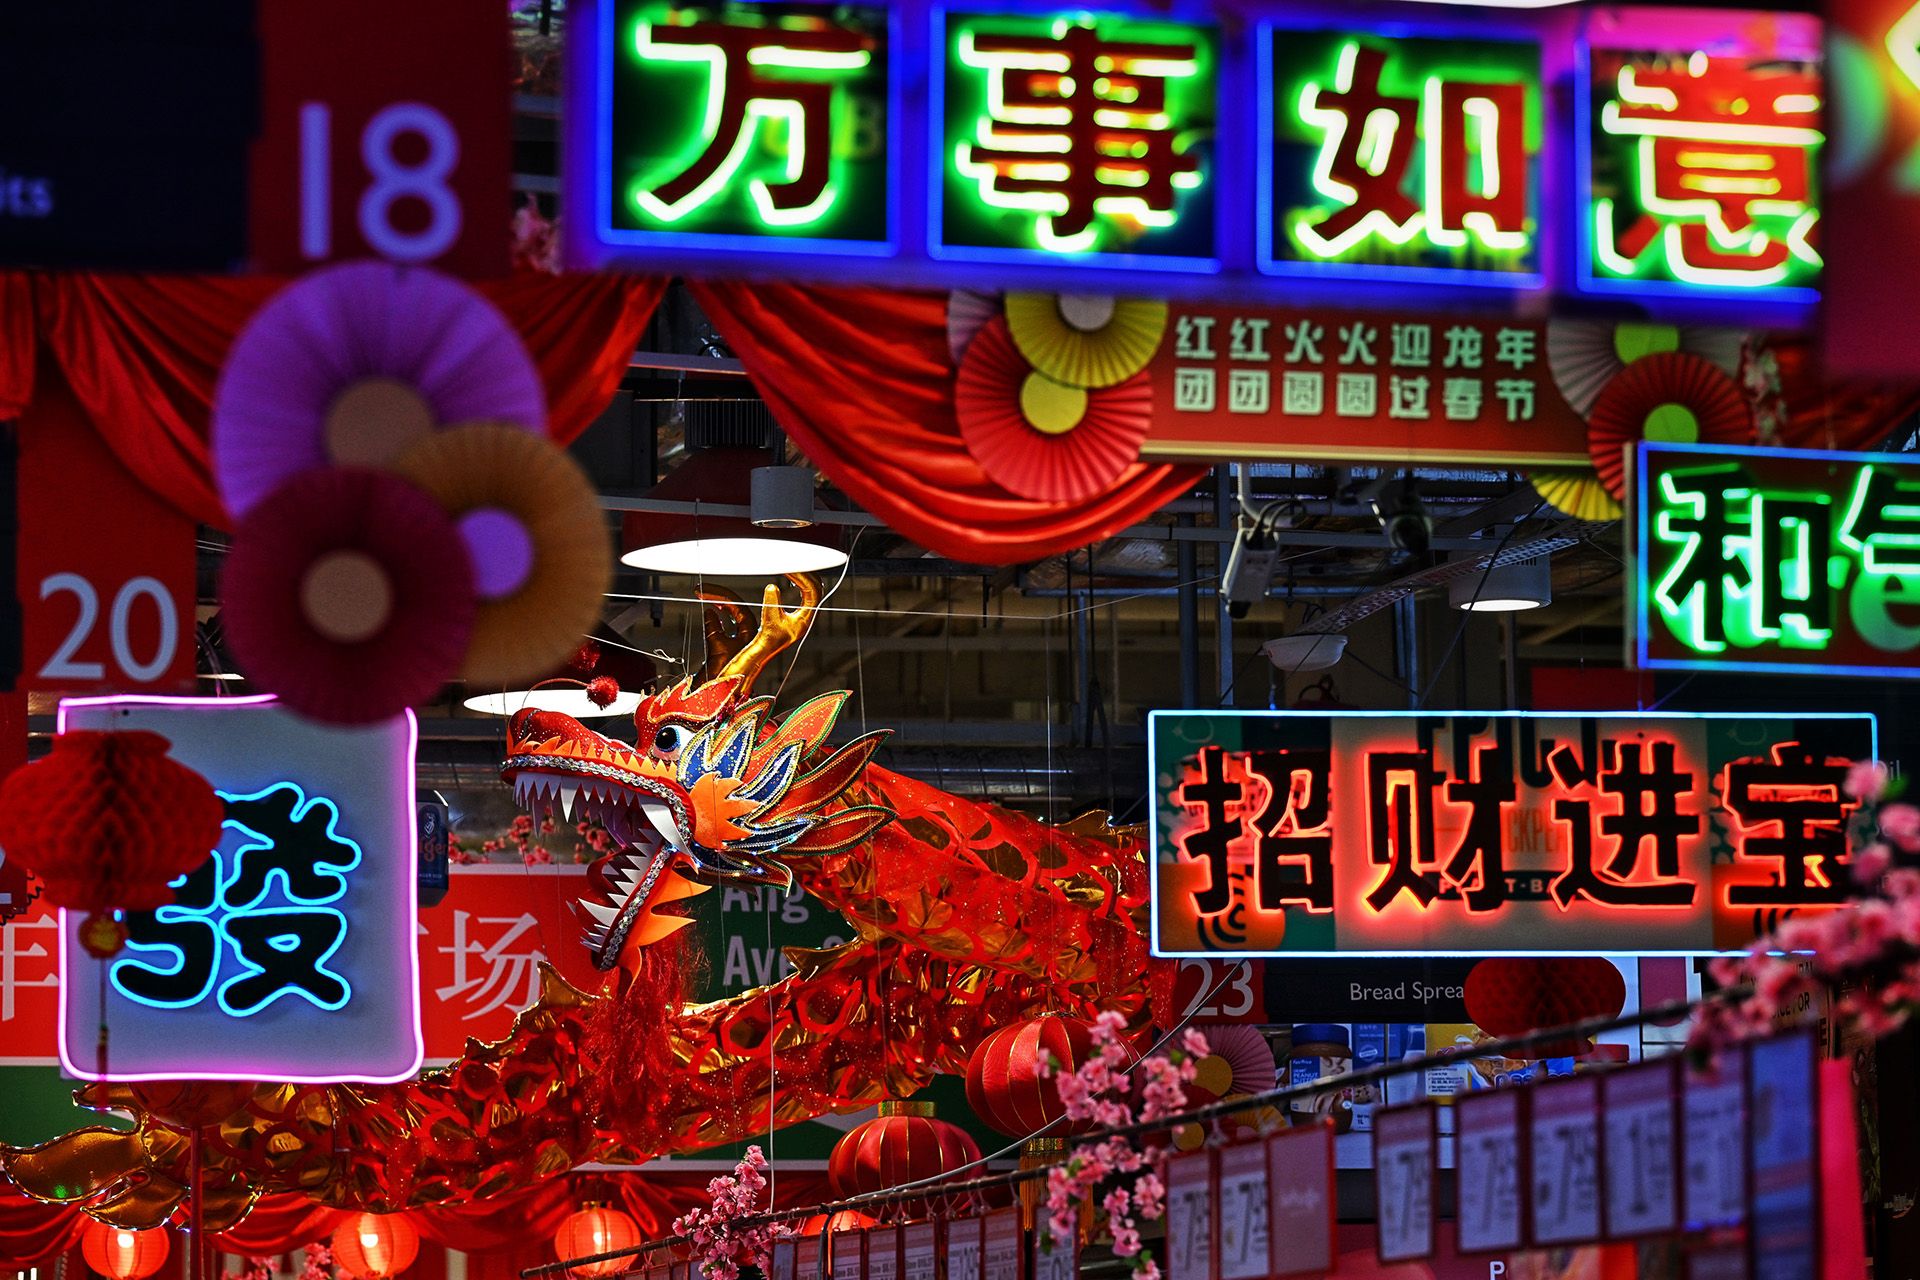 A decorative dragon perched among Chinese New Year greetings at FairPrice Xtra in AMK Hub. ST PHOTO: CHONG JUN LIANG